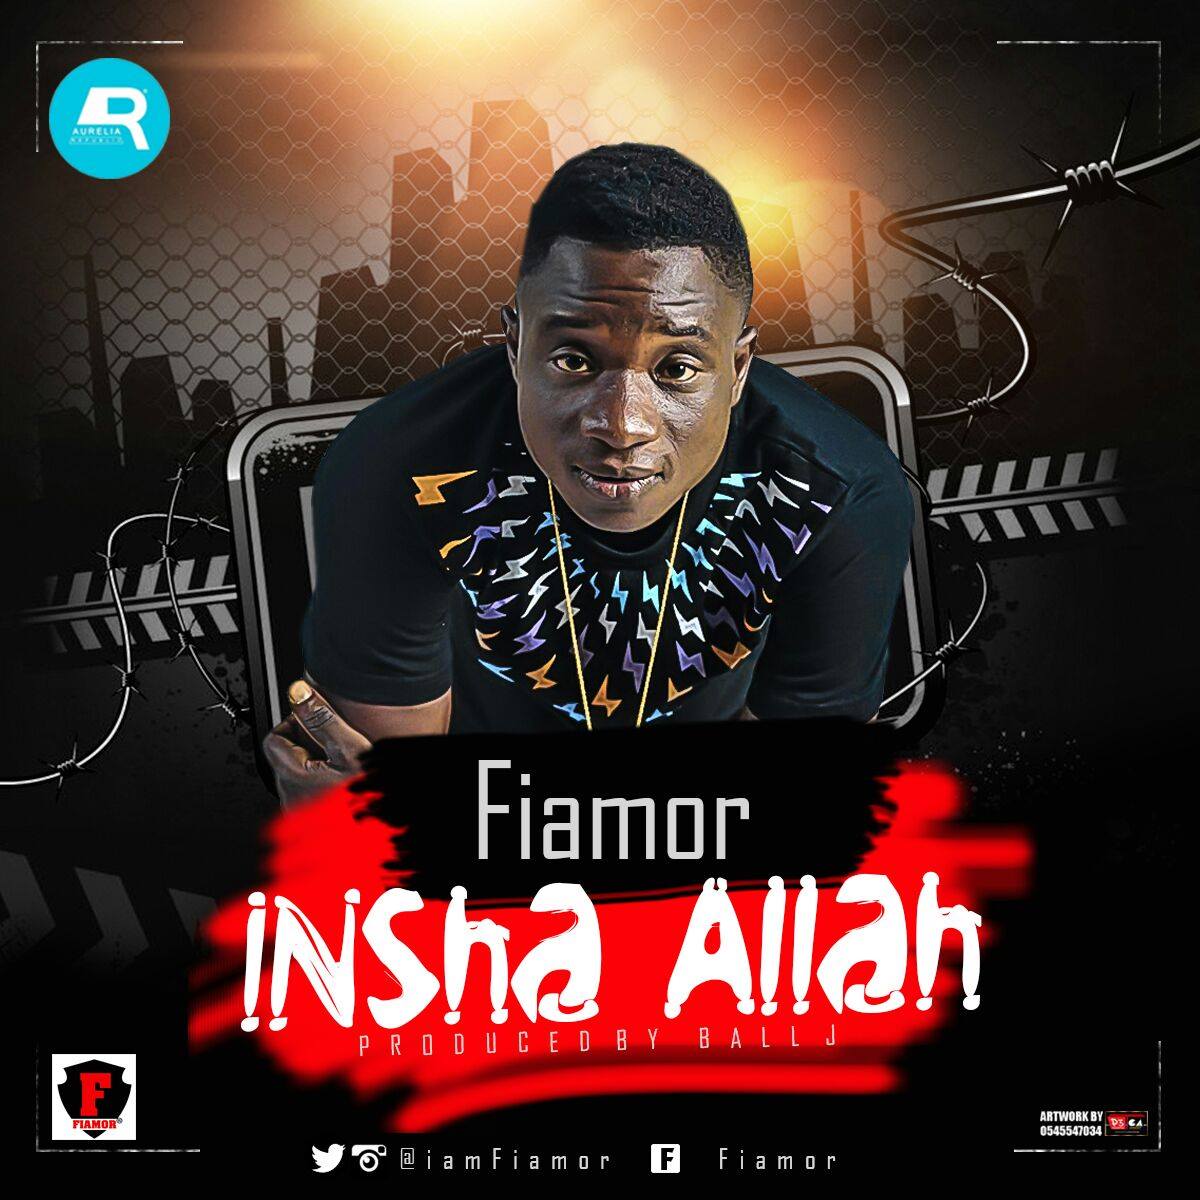 Fiamor – Insha Allah (Produced by Ball J Beatz)